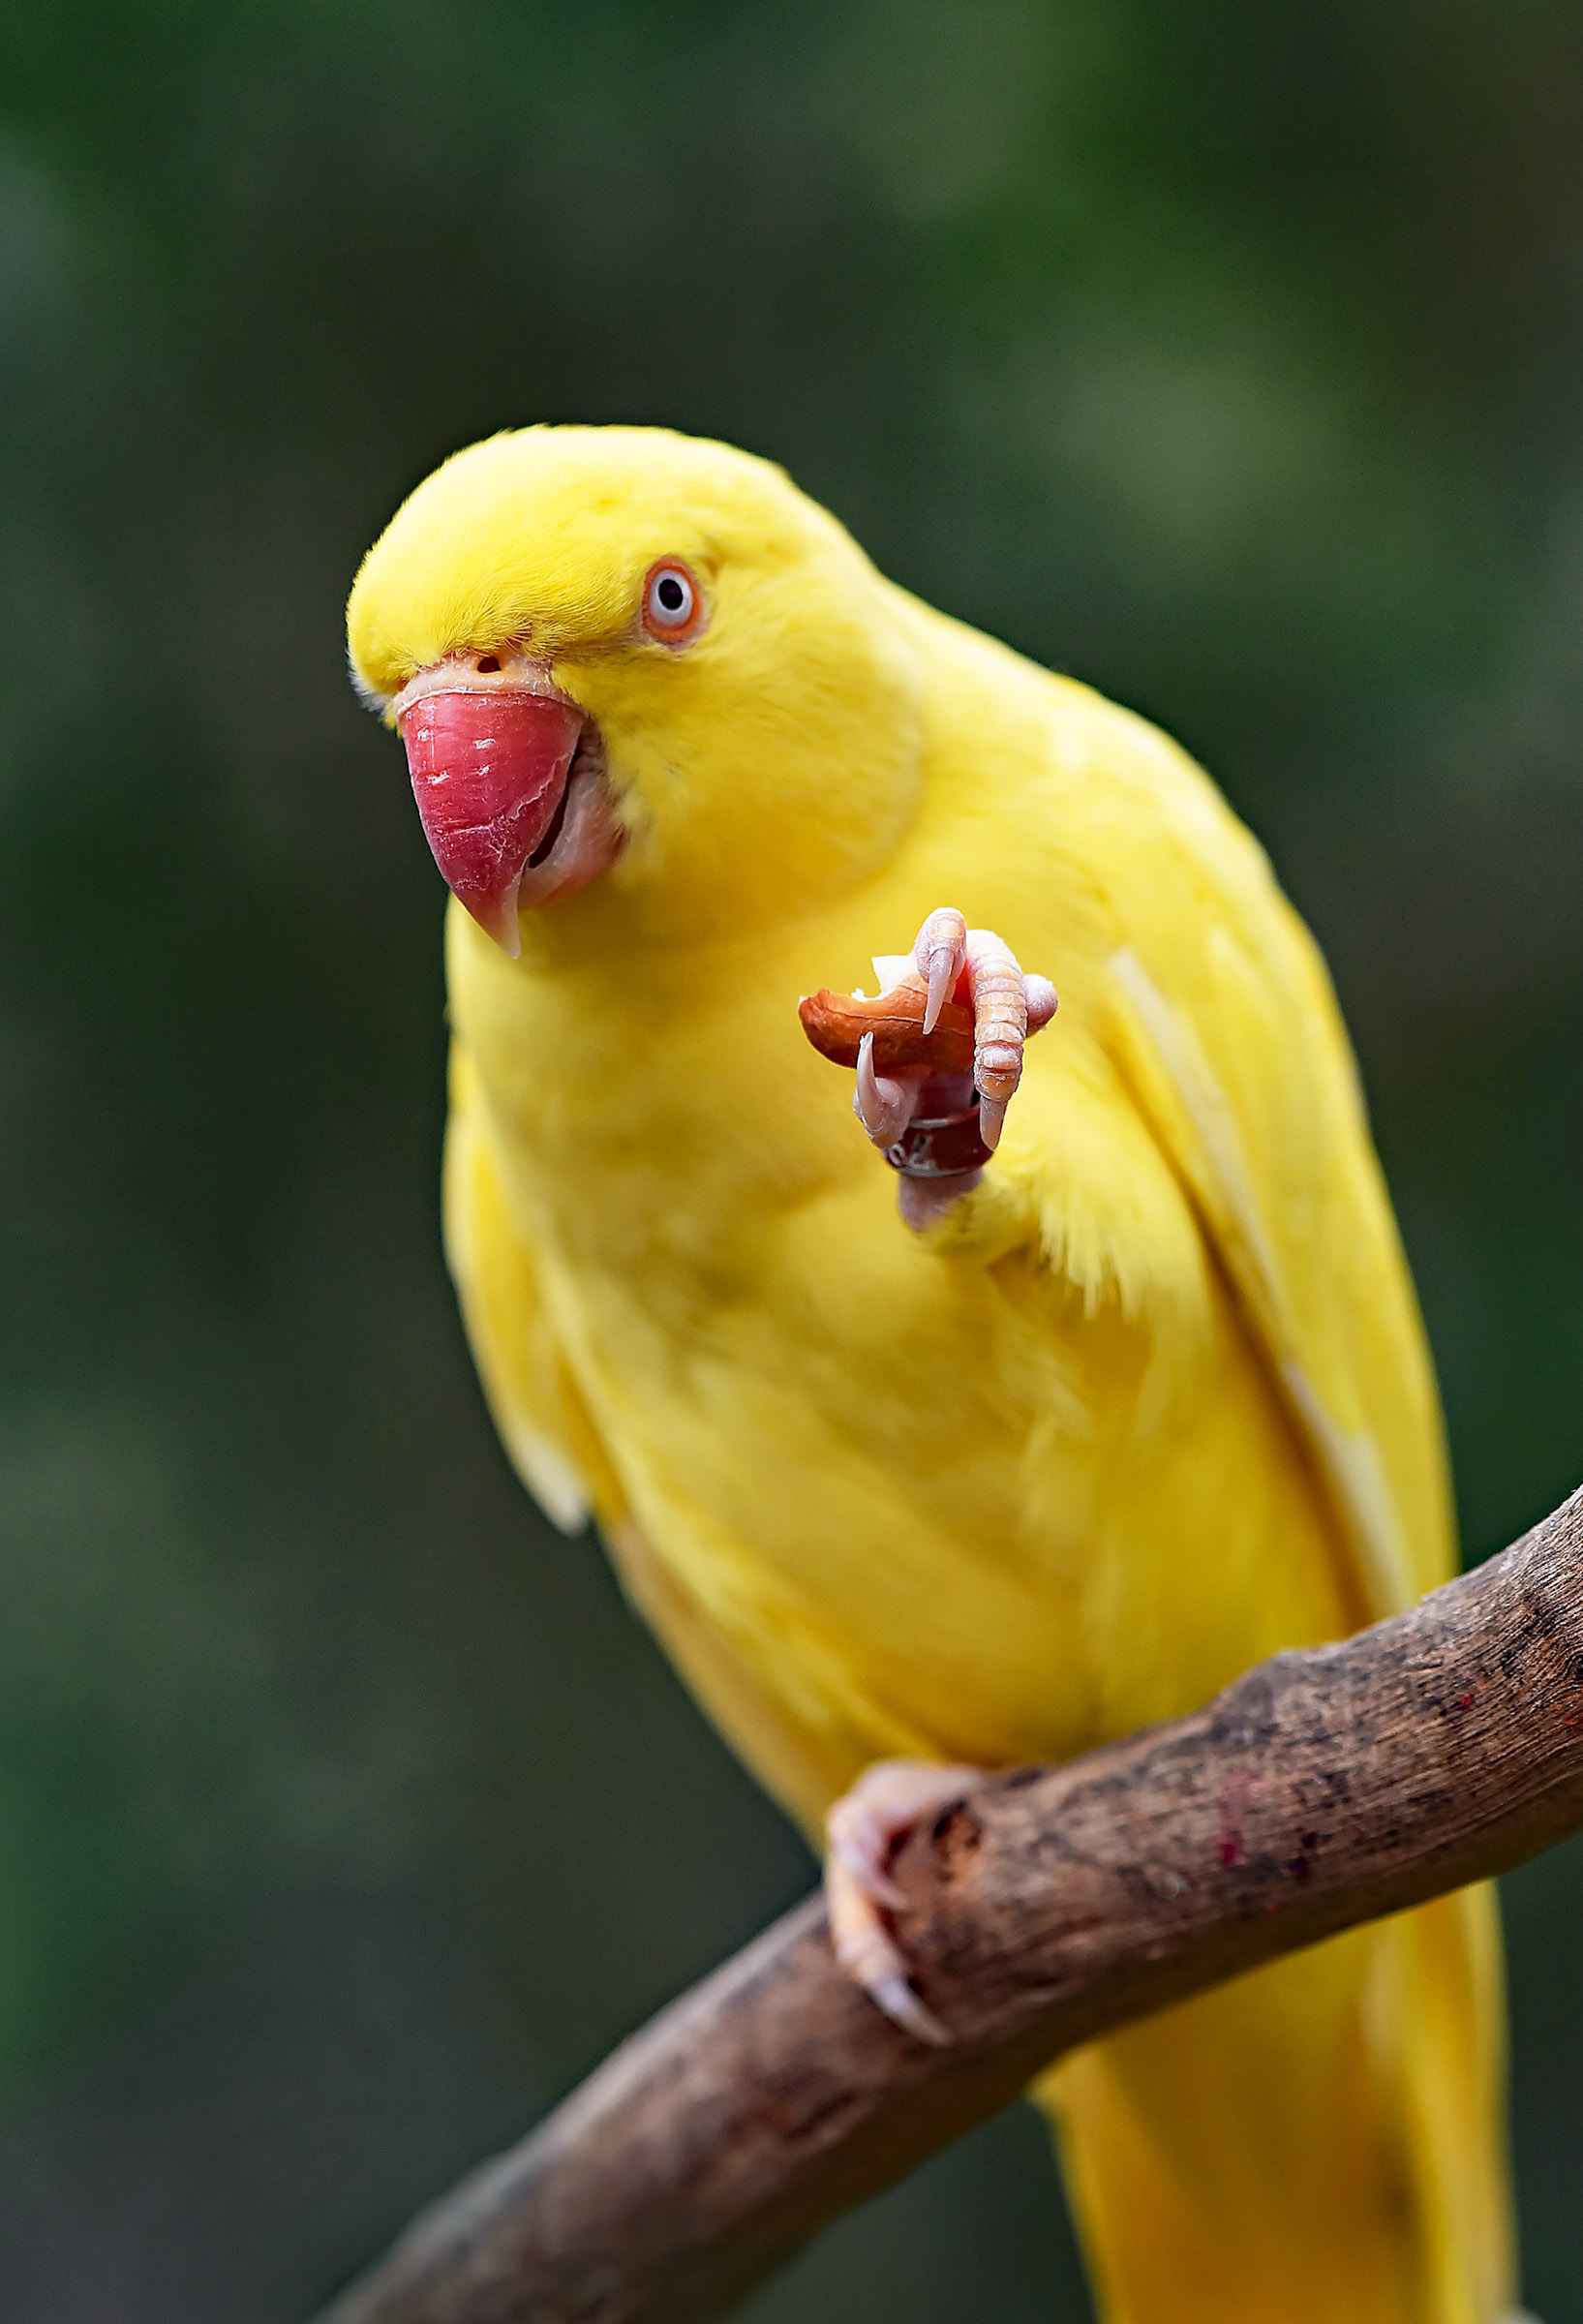 Yellow parakeet holding nut